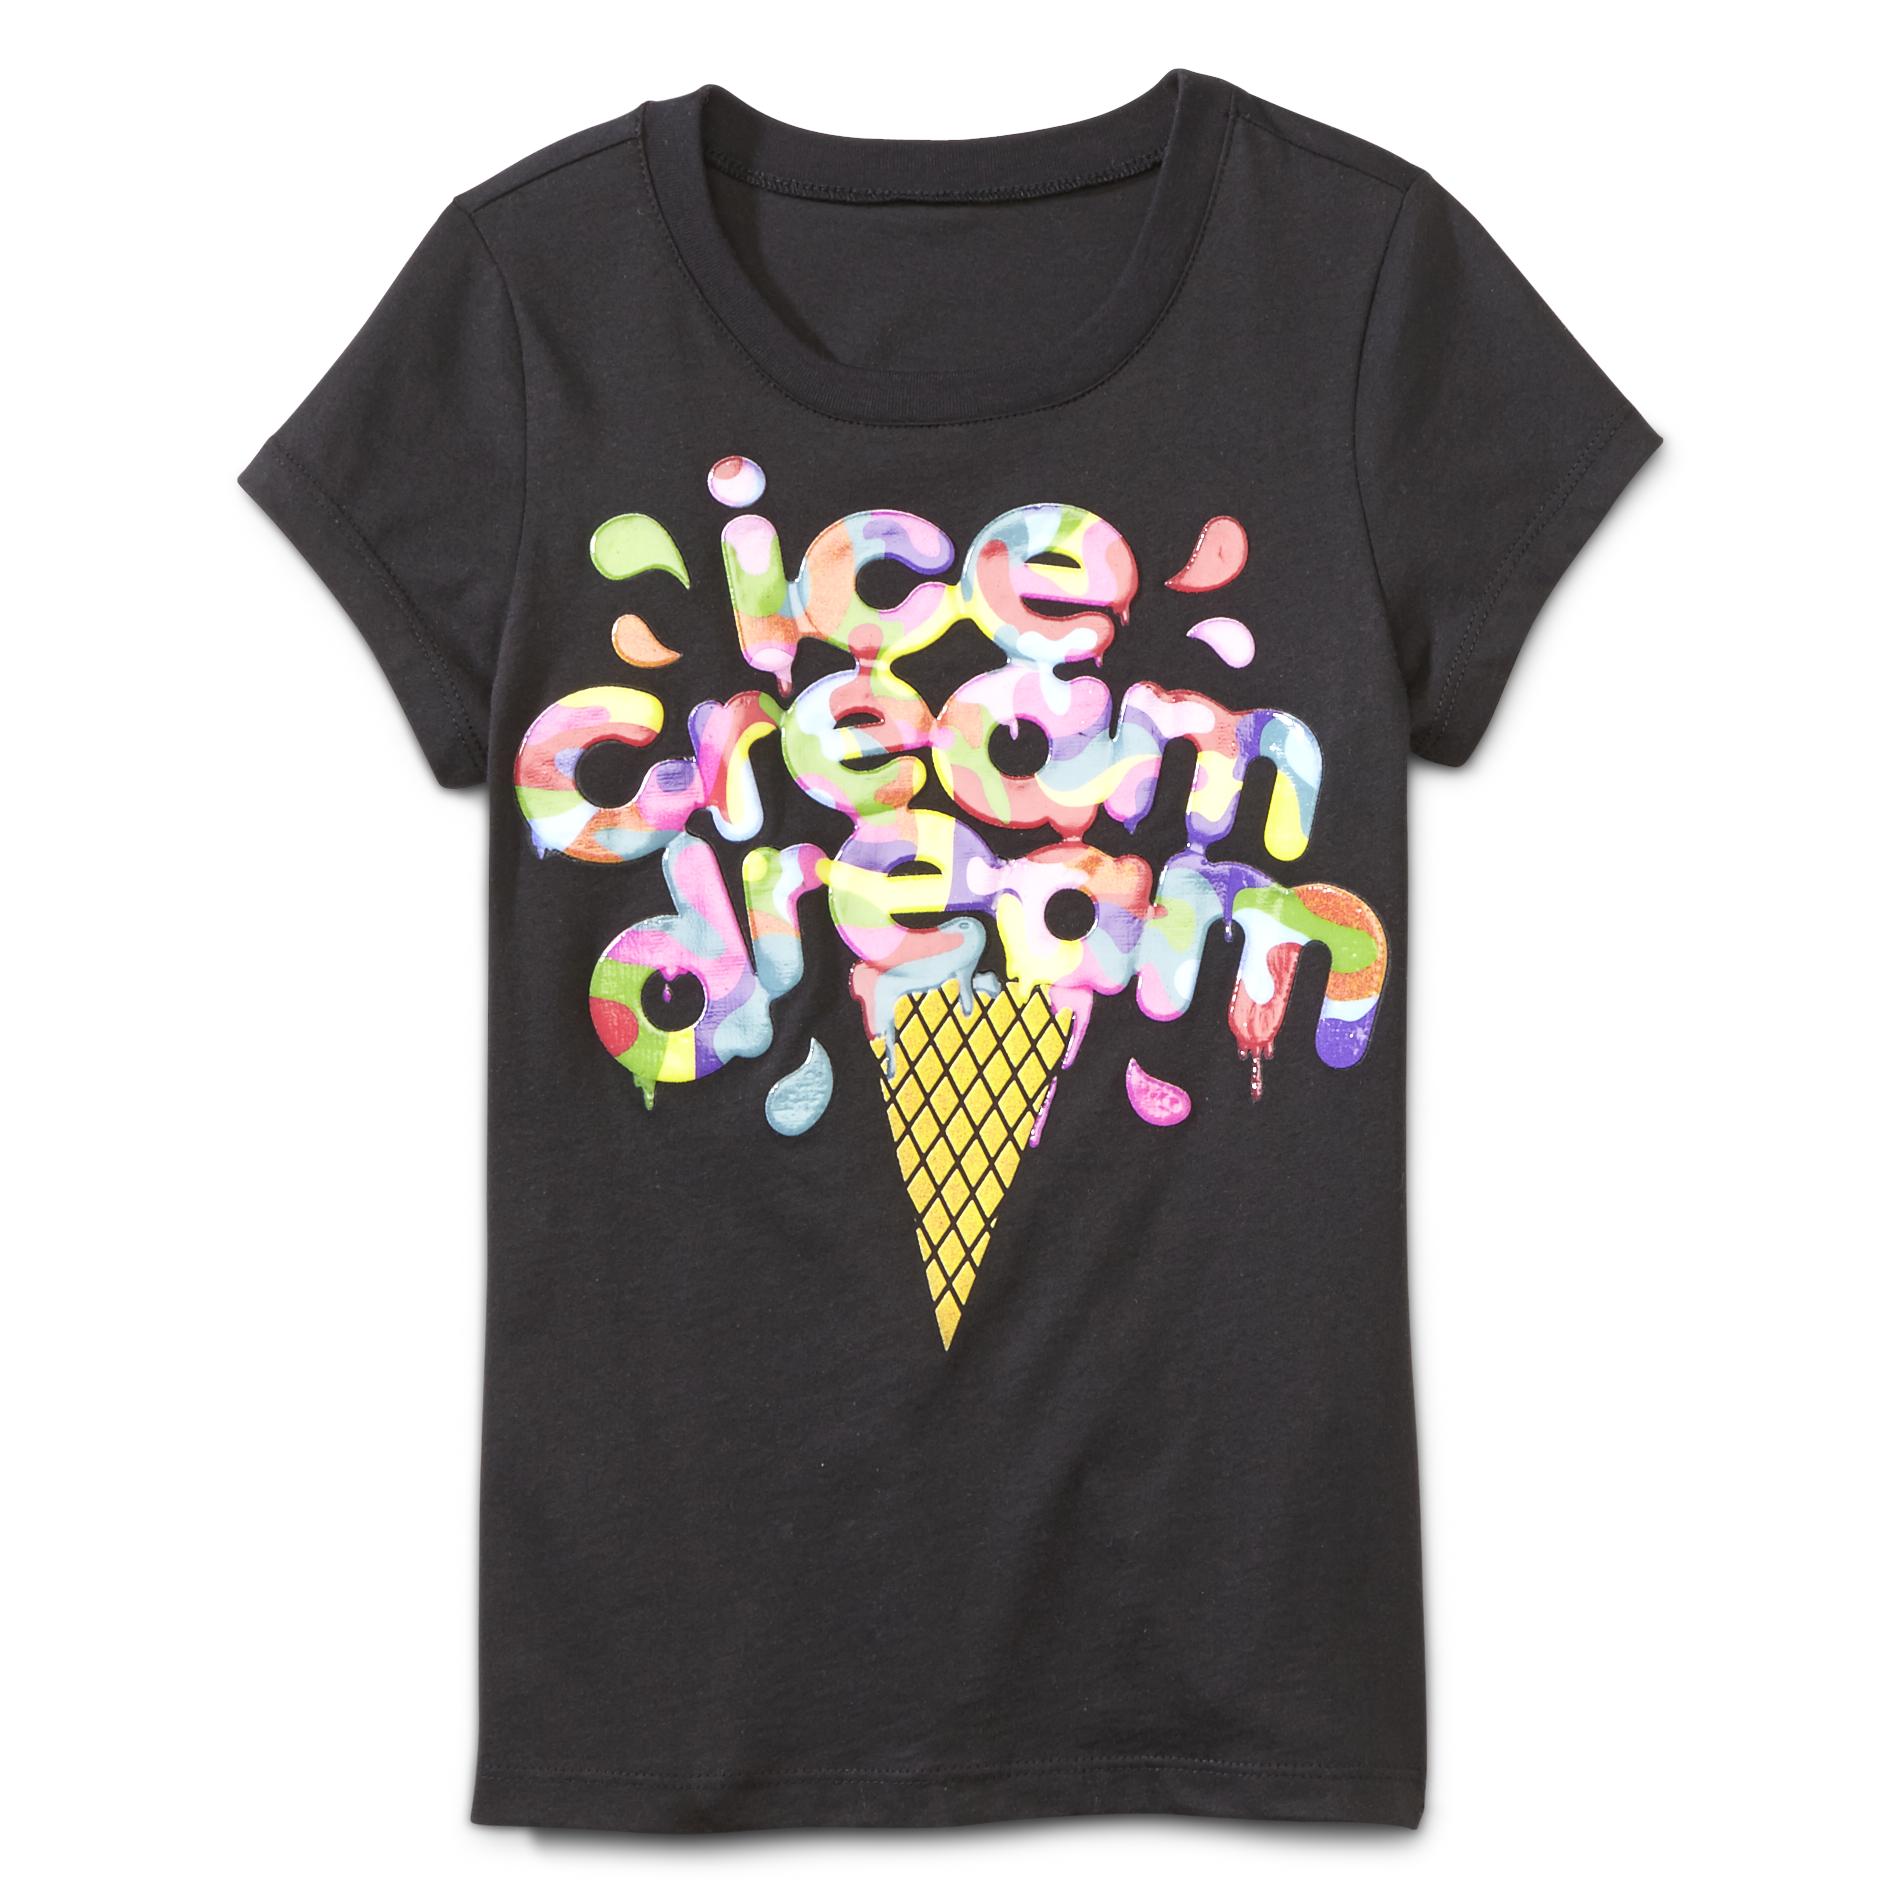 Route 66 Girl's Graphic T-Shirt - Ice Cream Dream